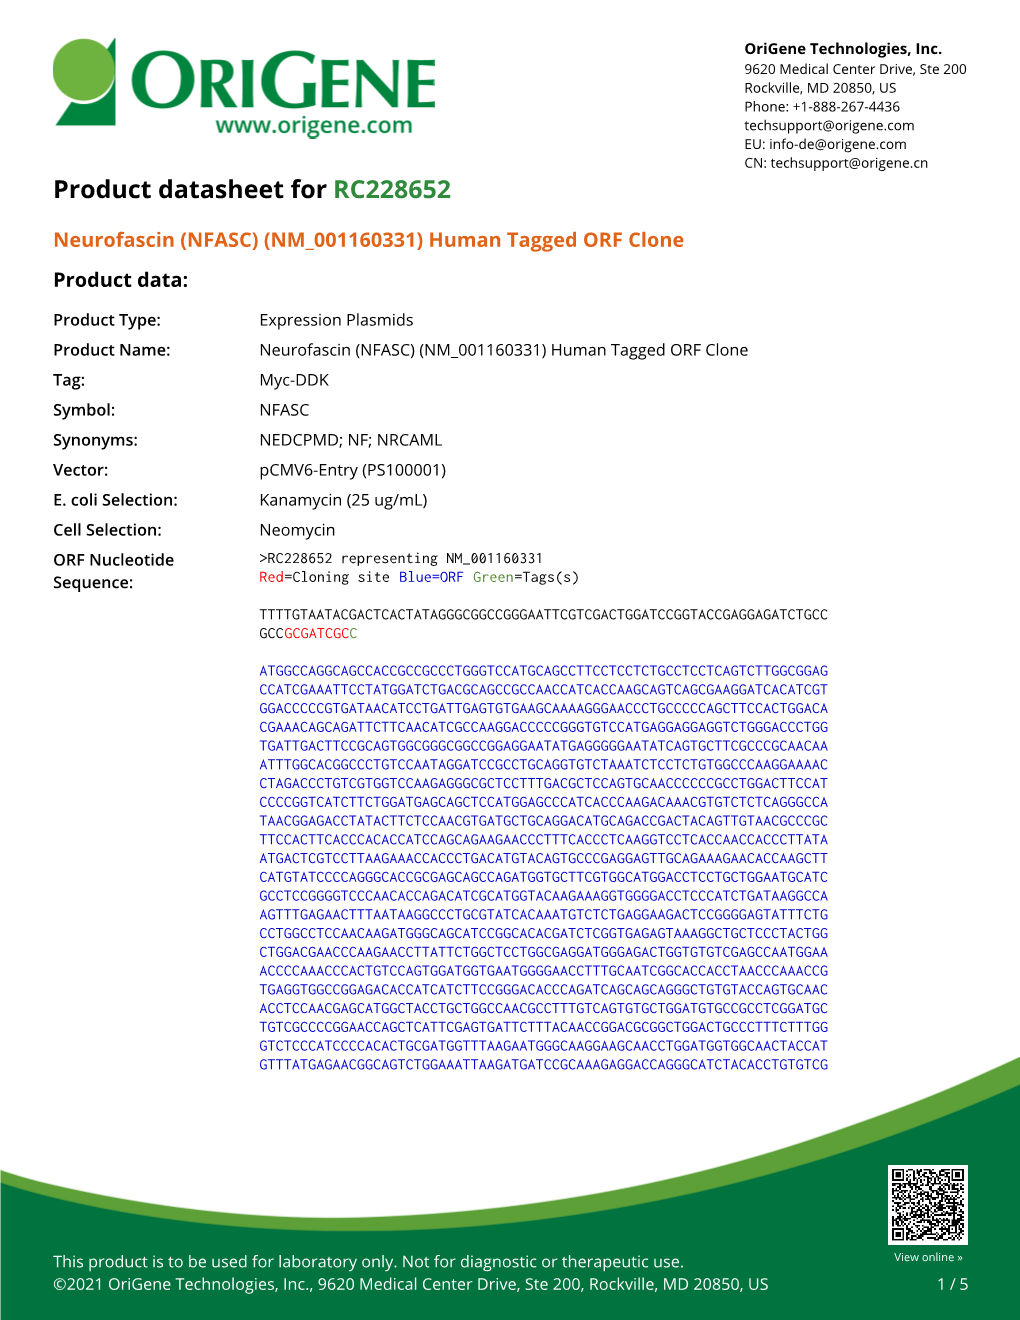 Neurofascin (NFASC) (NM 001160331) Human Tagged ORF Clone Product Data